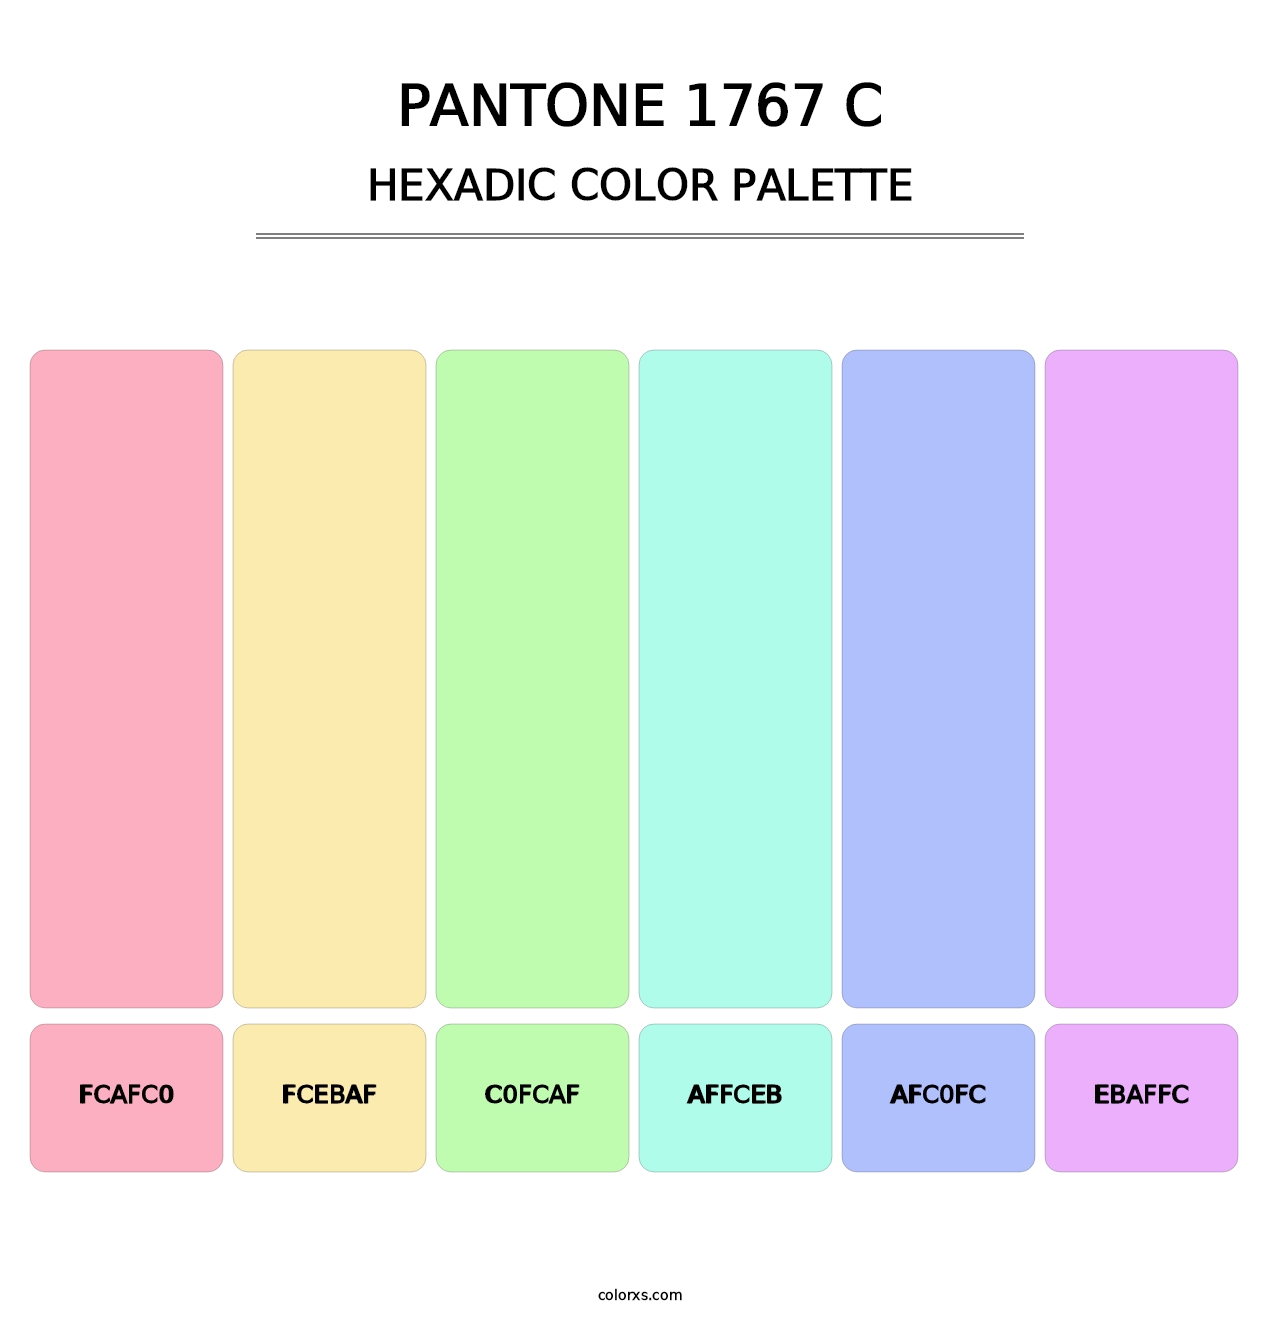 PANTONE 1767 C - Hexadic Color Palette